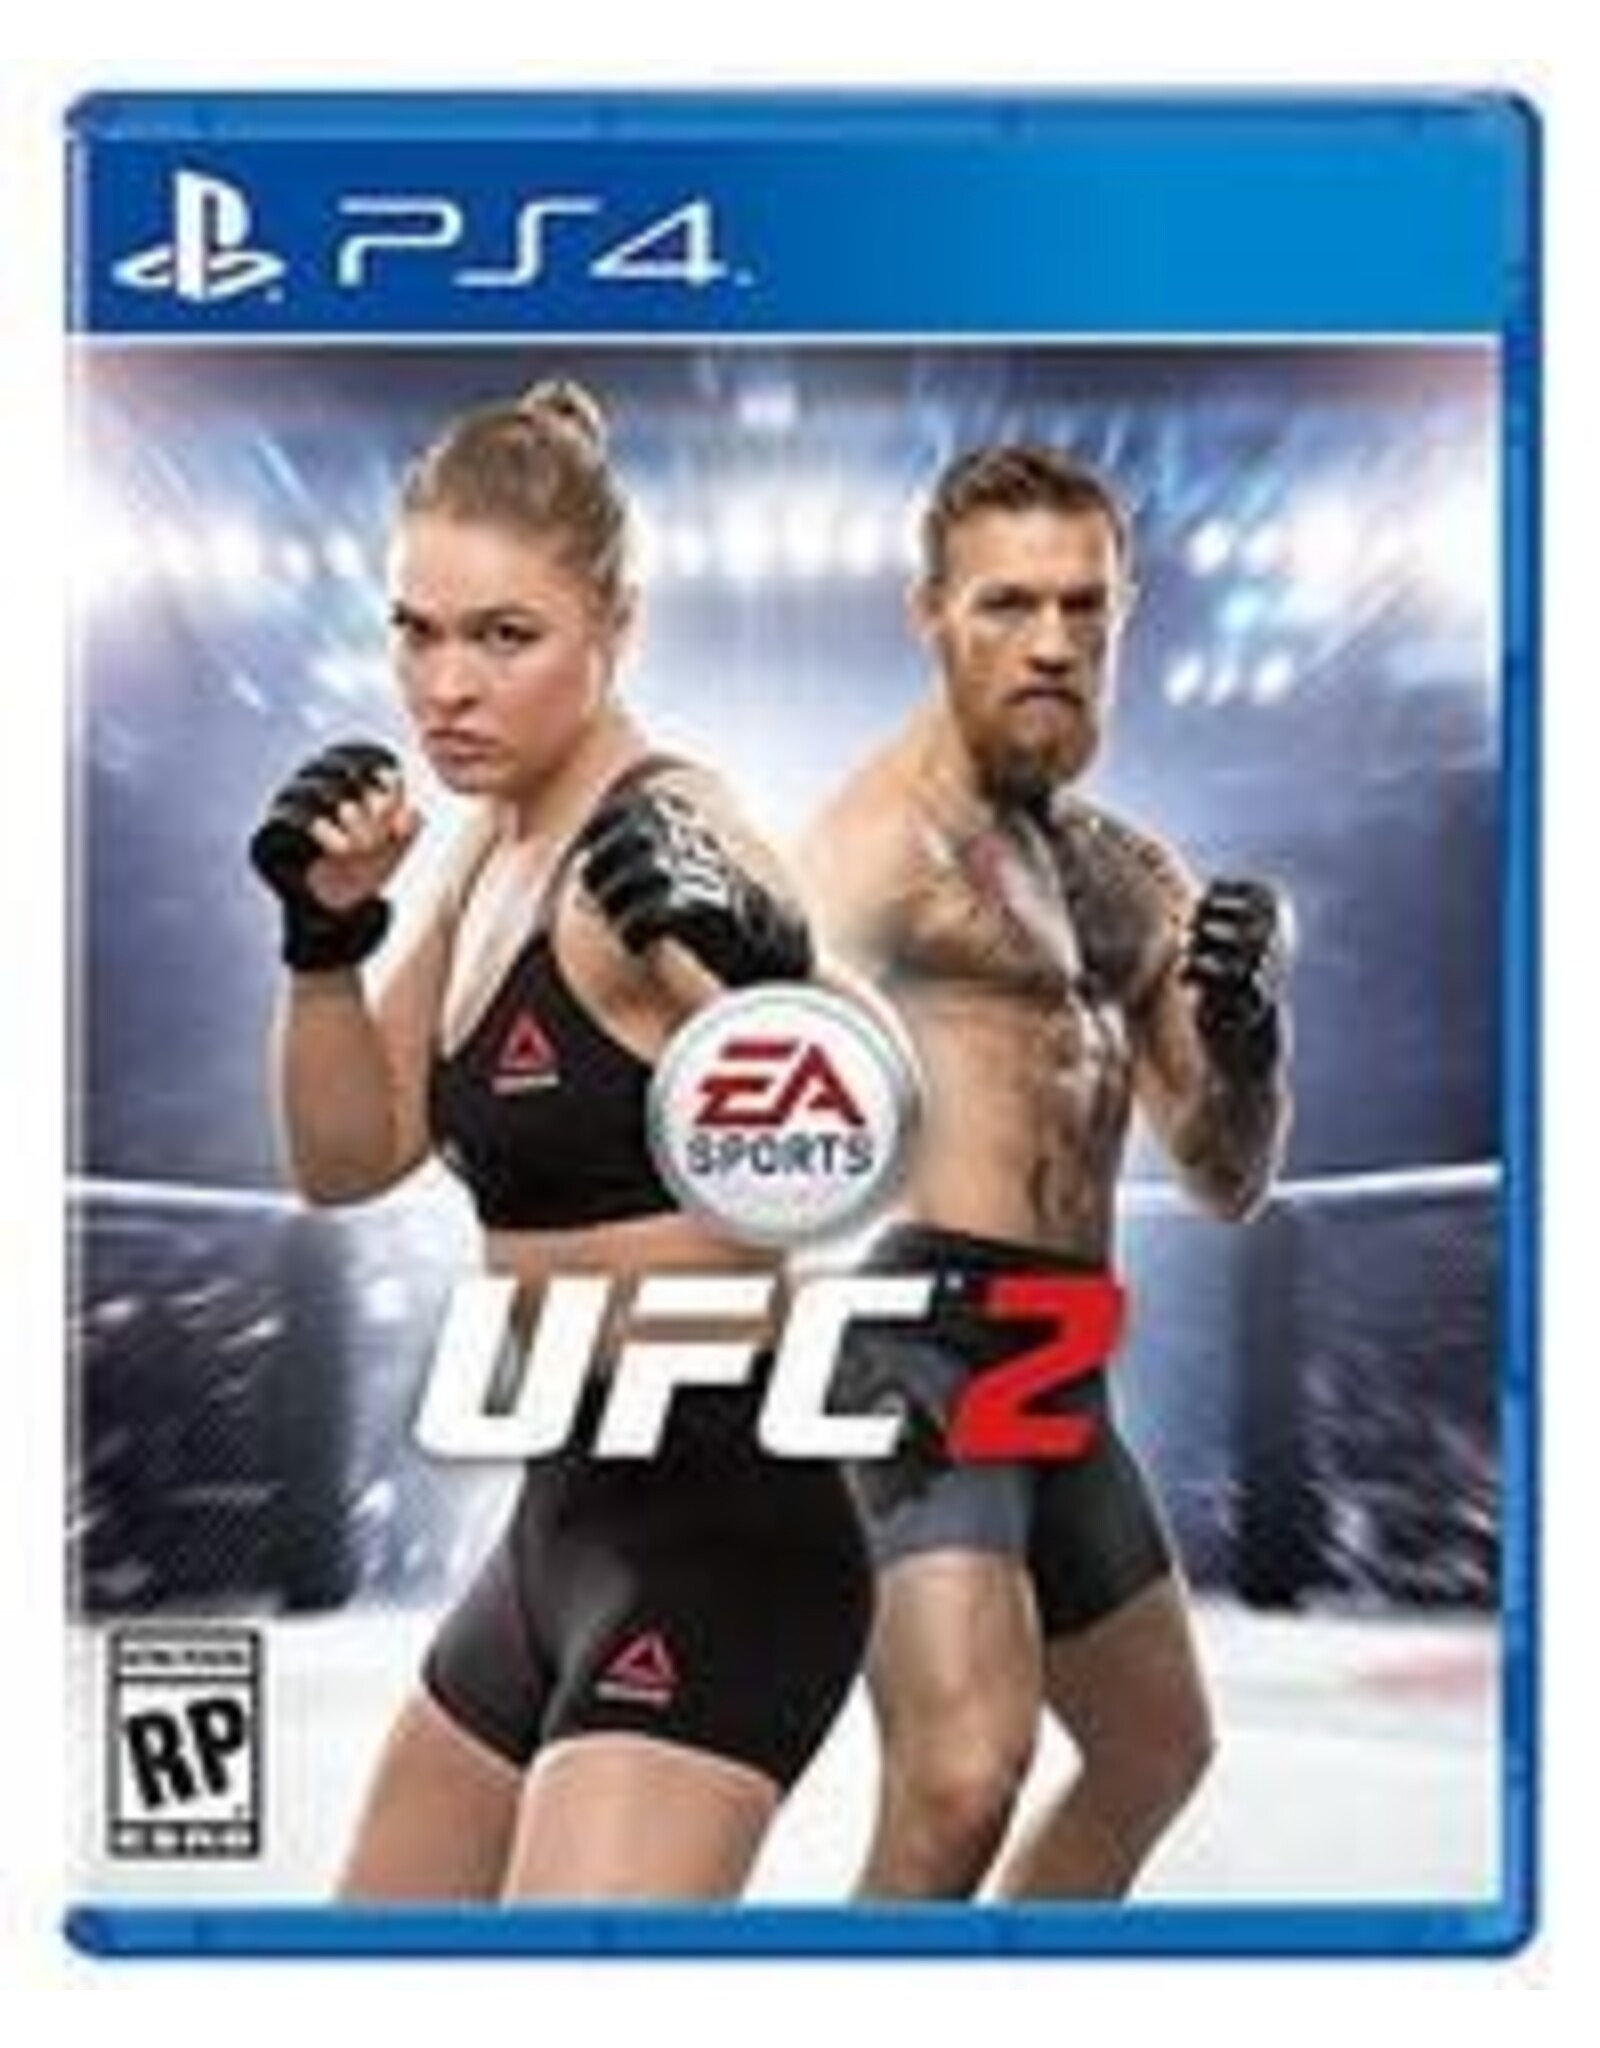 Playstation 4 UFC 2 (Used)